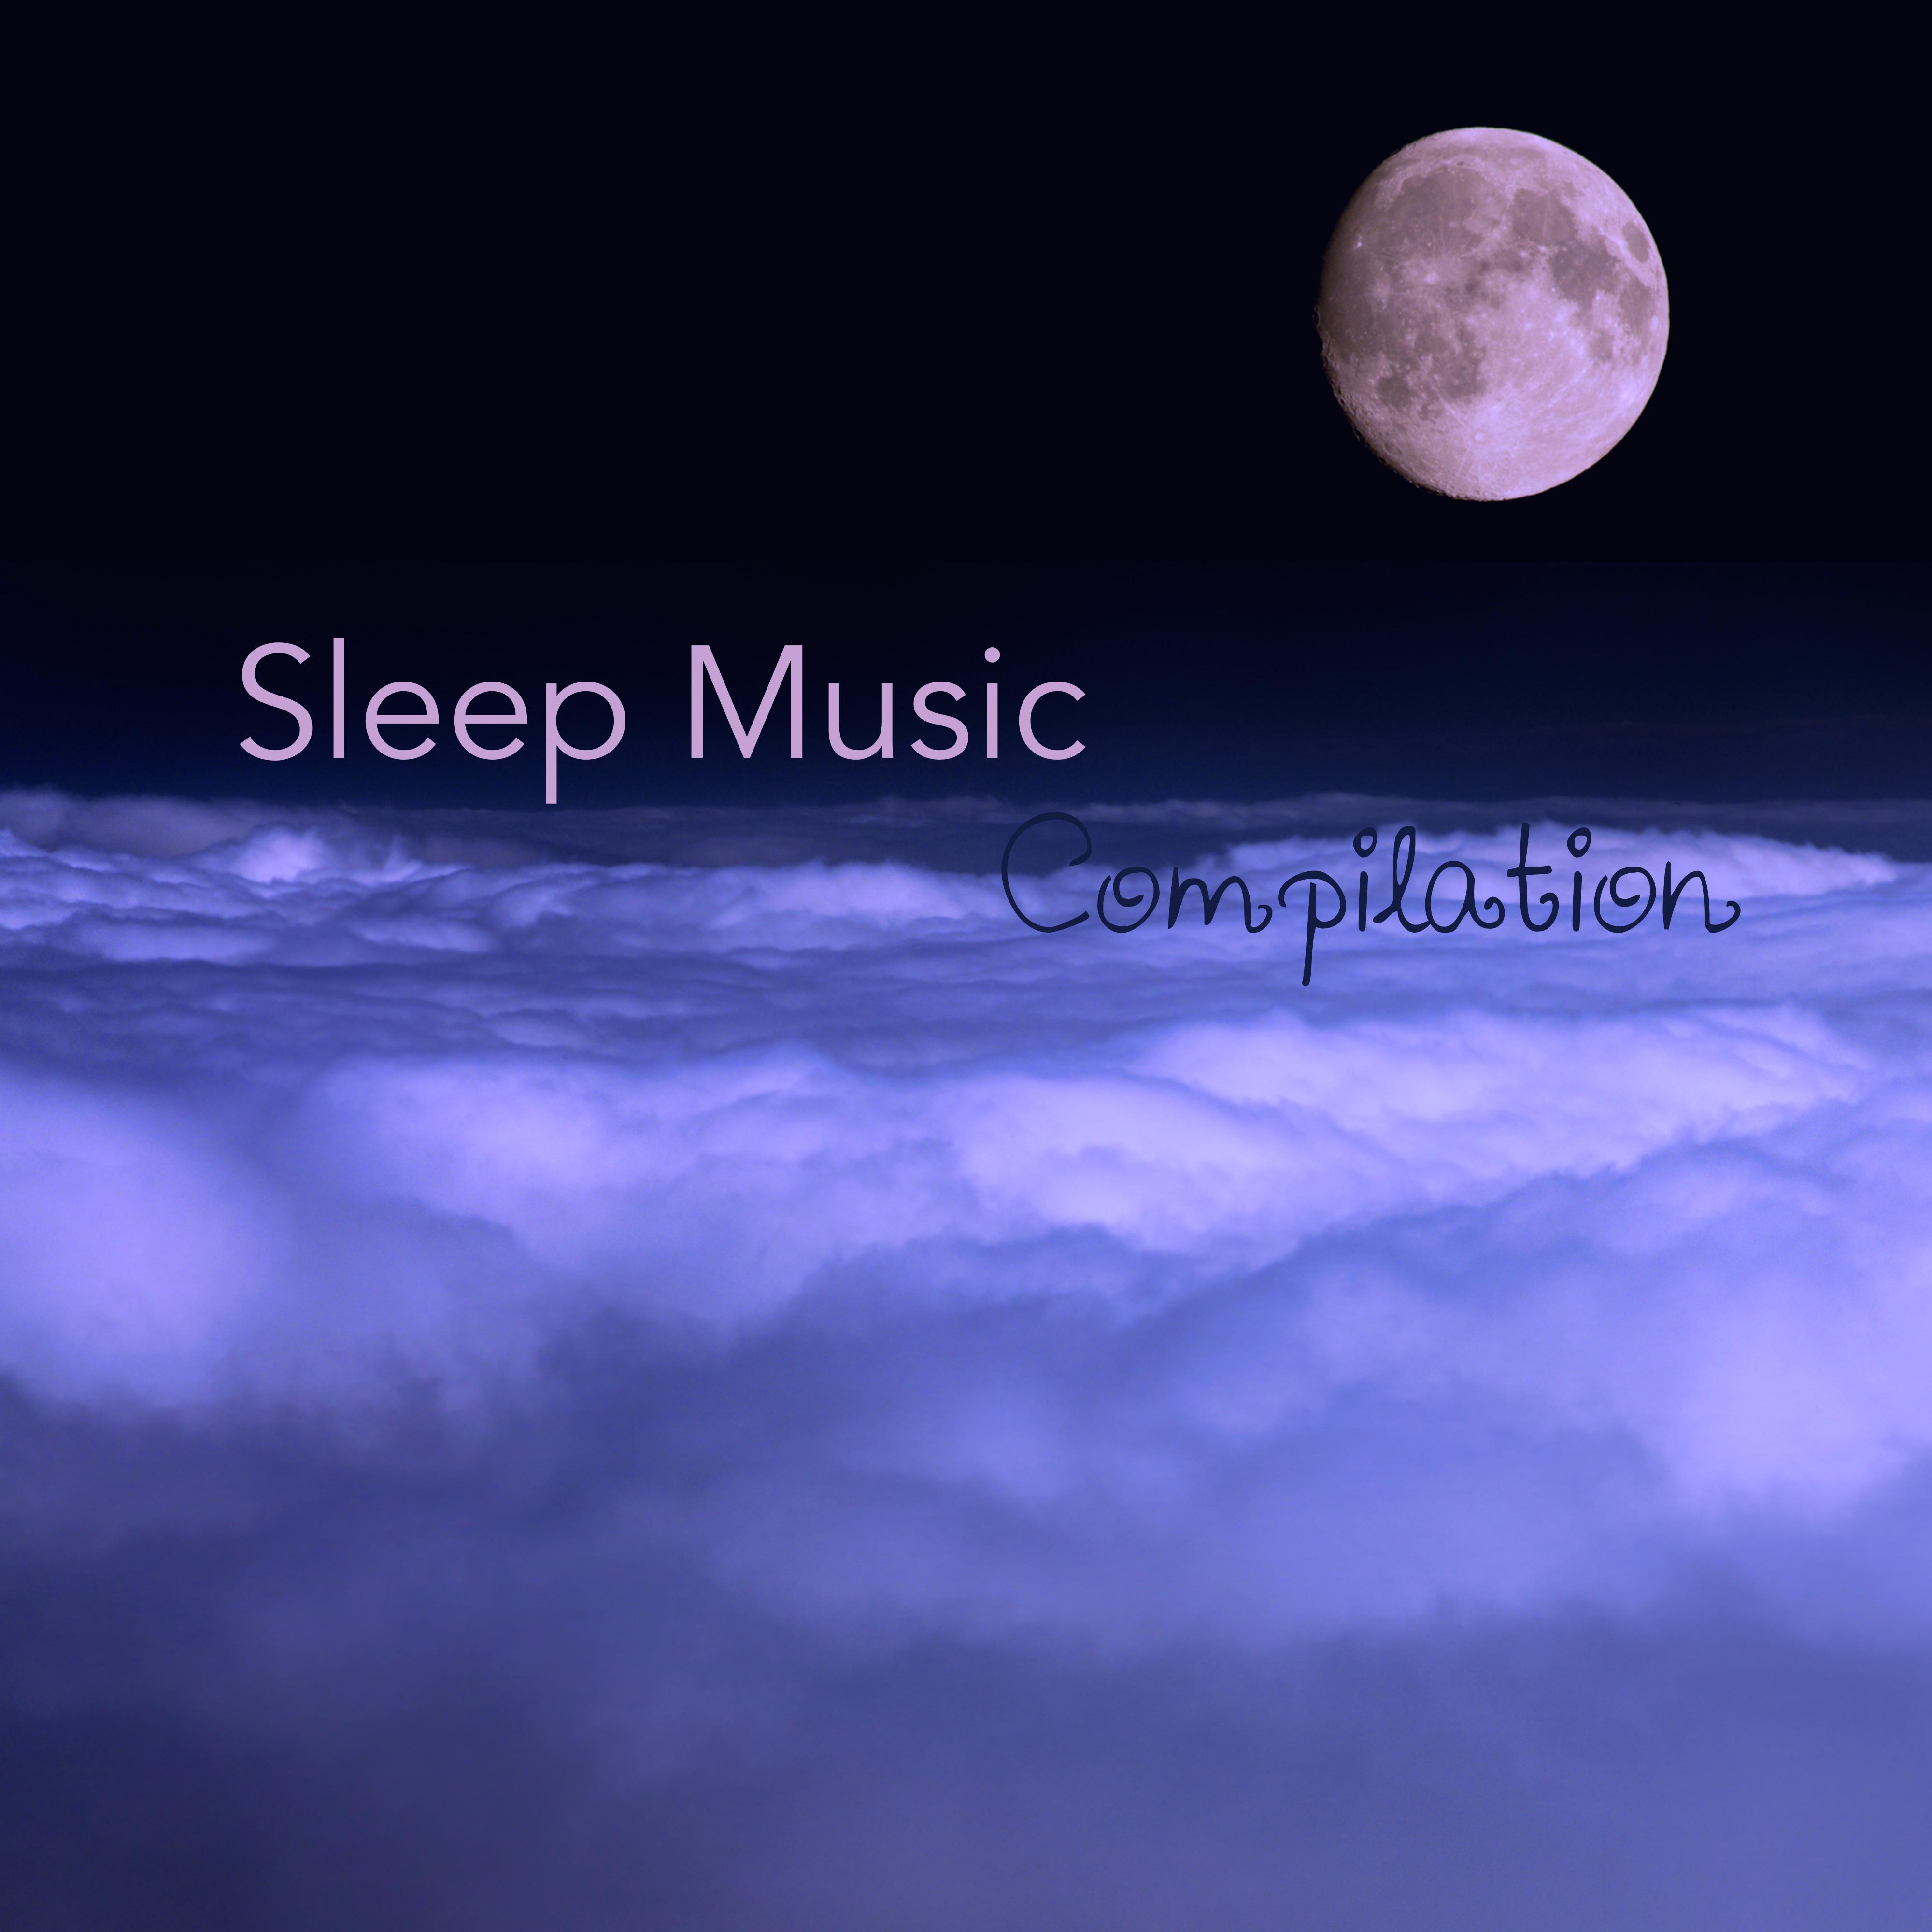 Sleeping Music Compilation